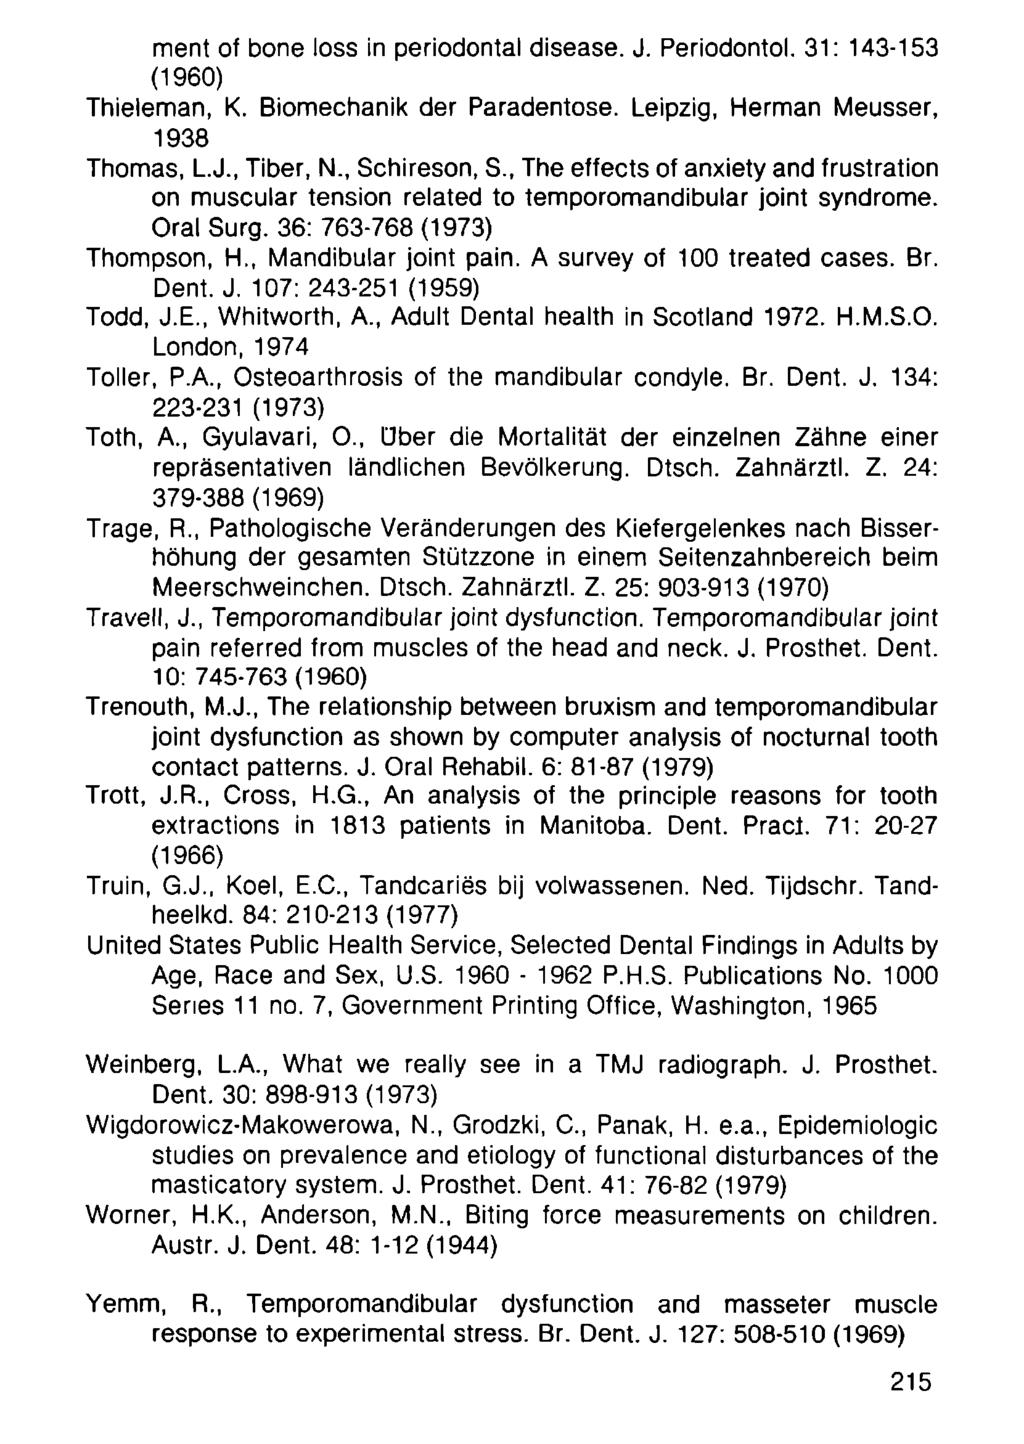 ment of bone loss in periodontal disease. J. Periodontol. 31: 143-153 (196) Thieleman, K. Biomechanik der Paradentose. Leipzig, Herman Meusser, 1938 Thomas, L.J., Tiber, N., Schireson, S.